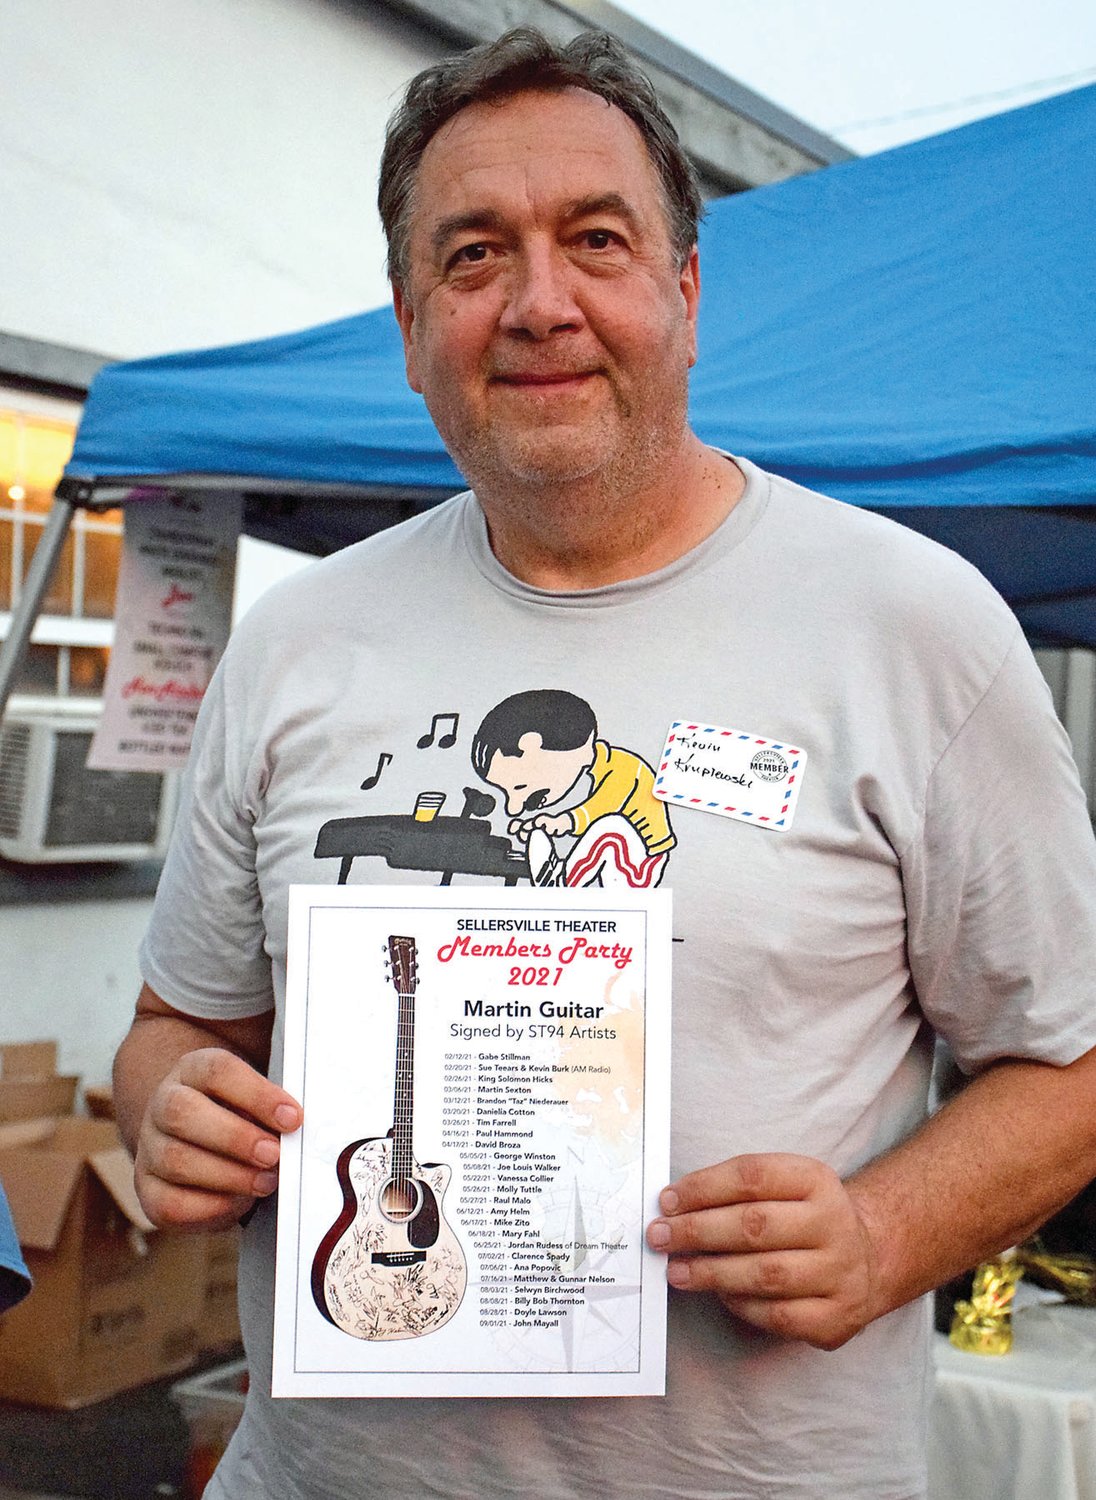 Keith Kruplewski, the grand prize winner of the signed Martin guitar.